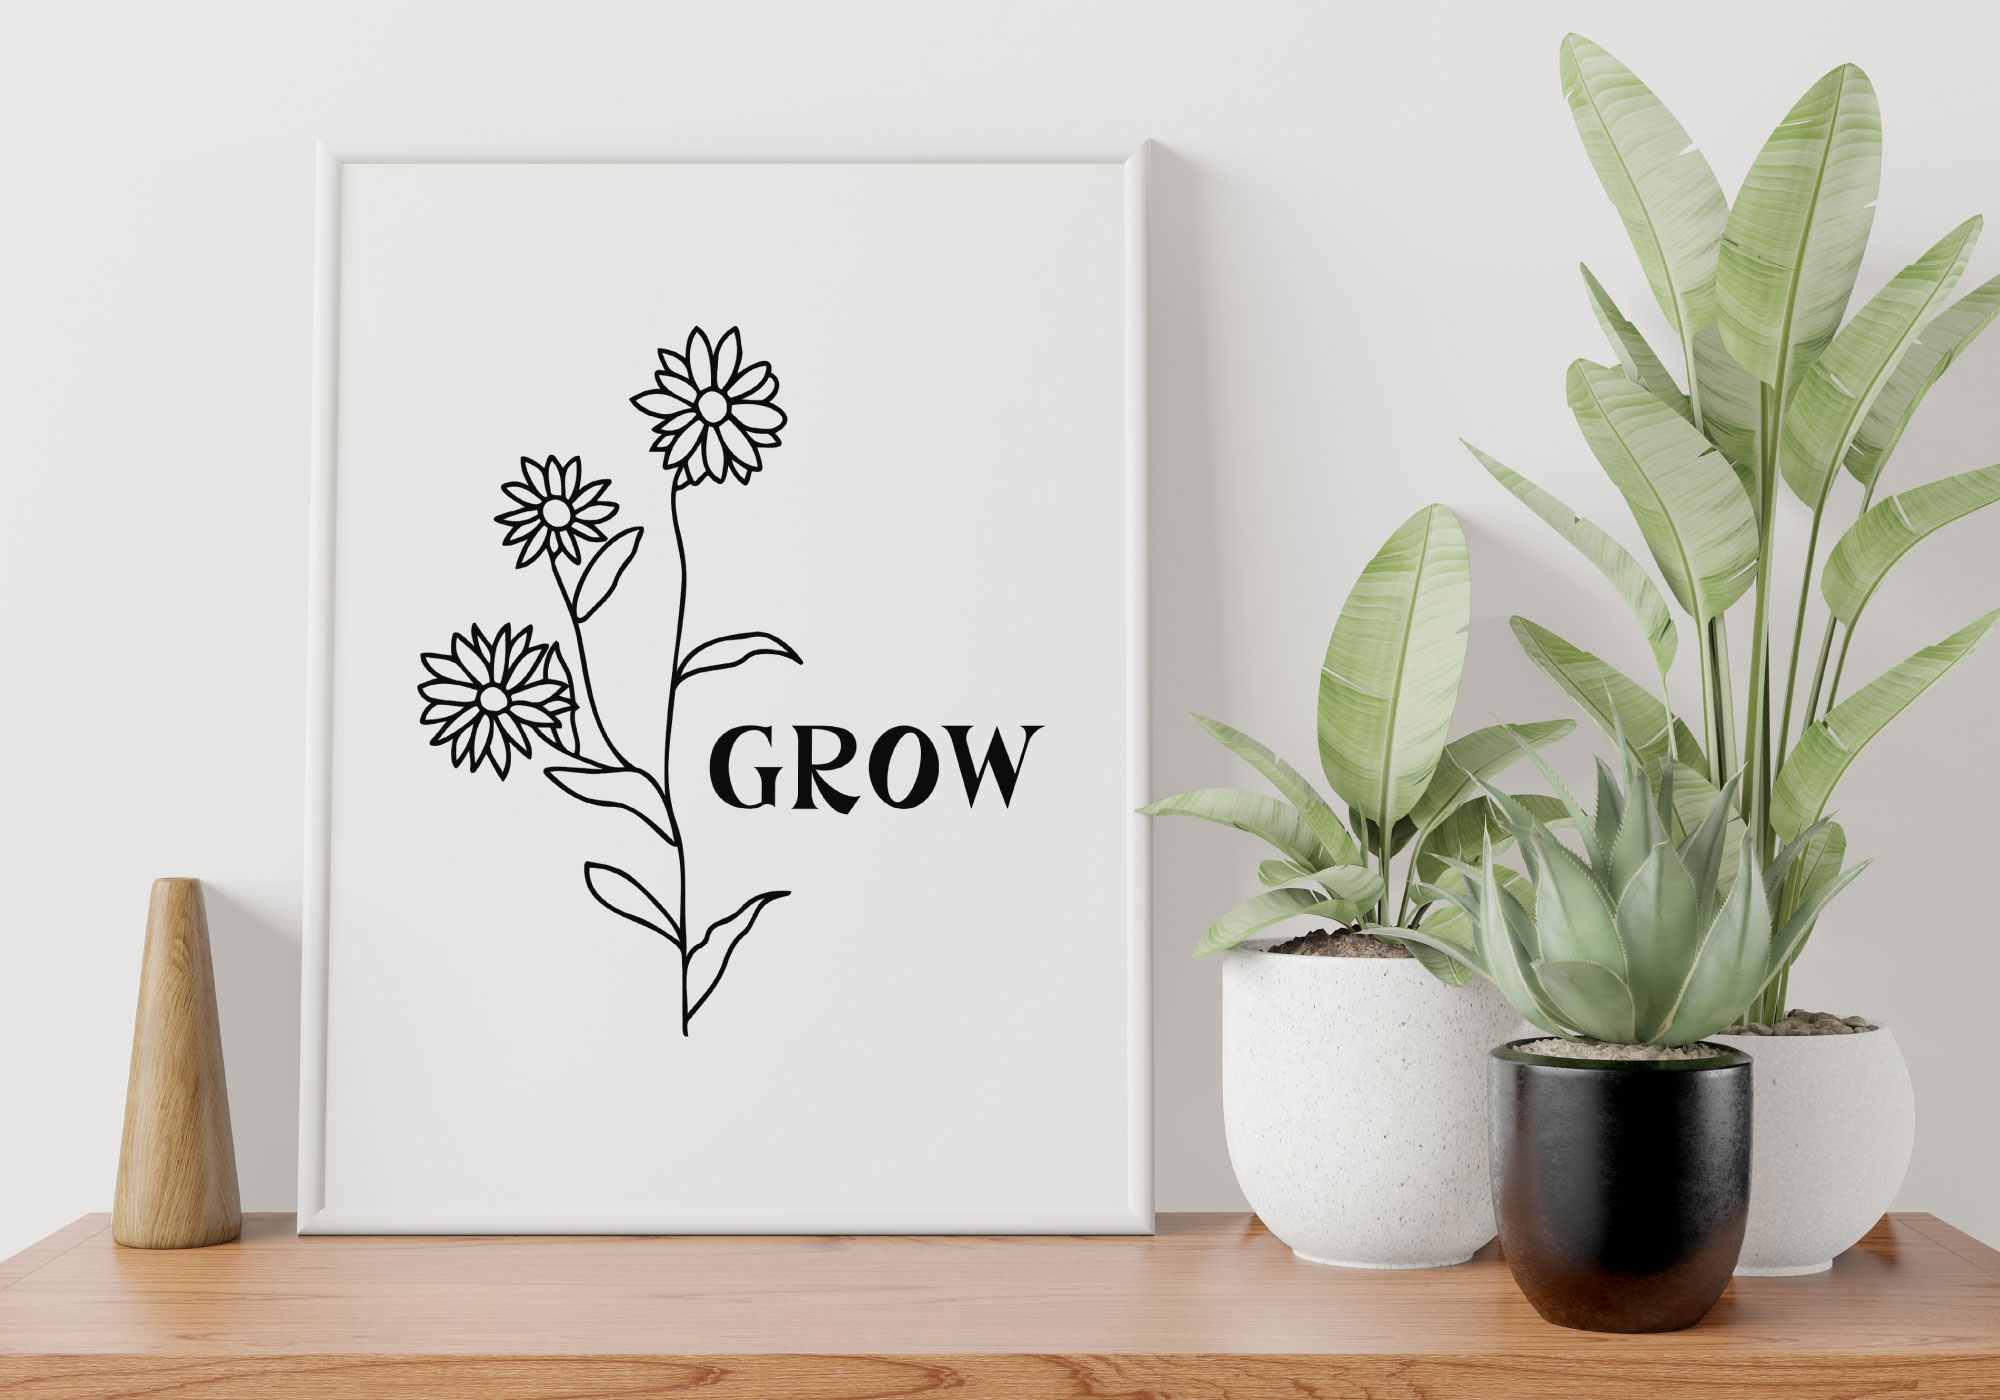 Free Grow Daisy SVG